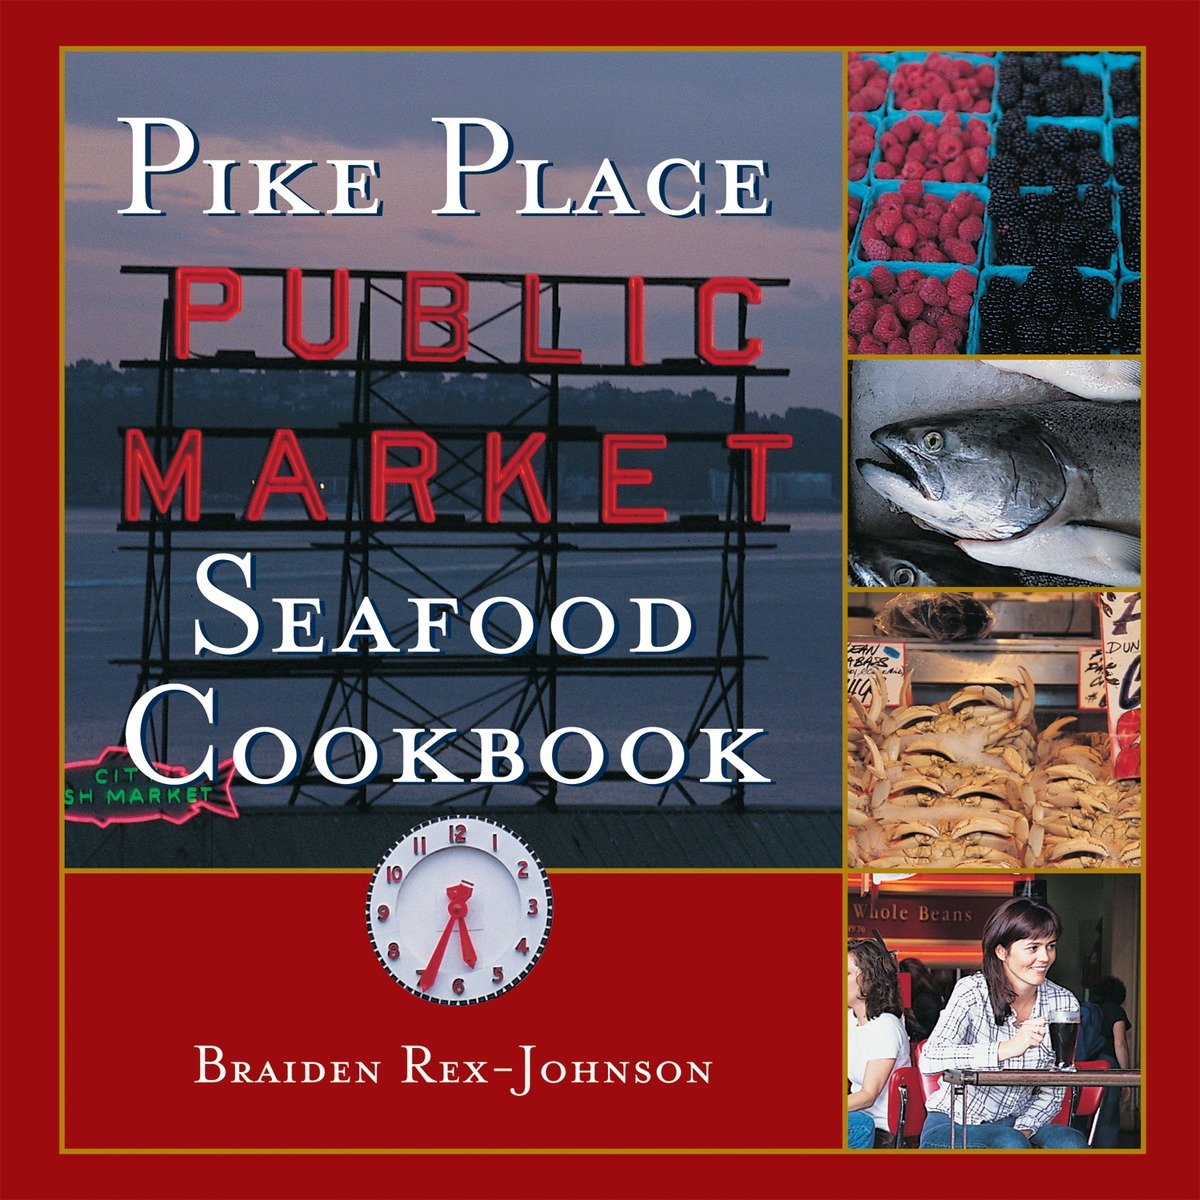 Pike Place Public Market Seafood Cookbook (Hardcover Book)